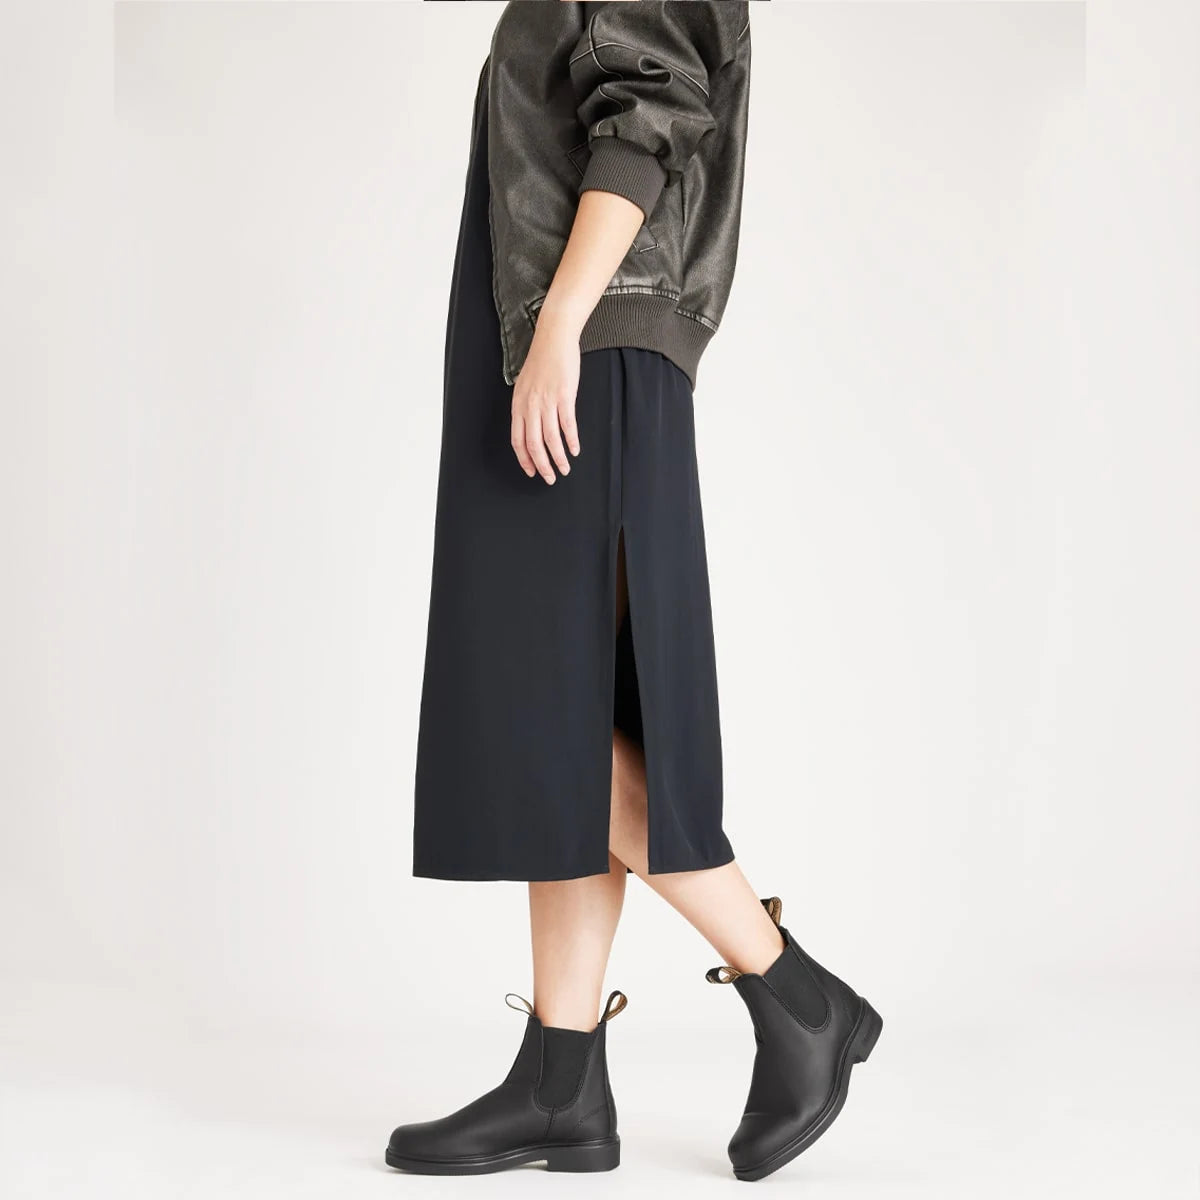 Blundstone Unisex 063 Dress Chelsea Black Boots